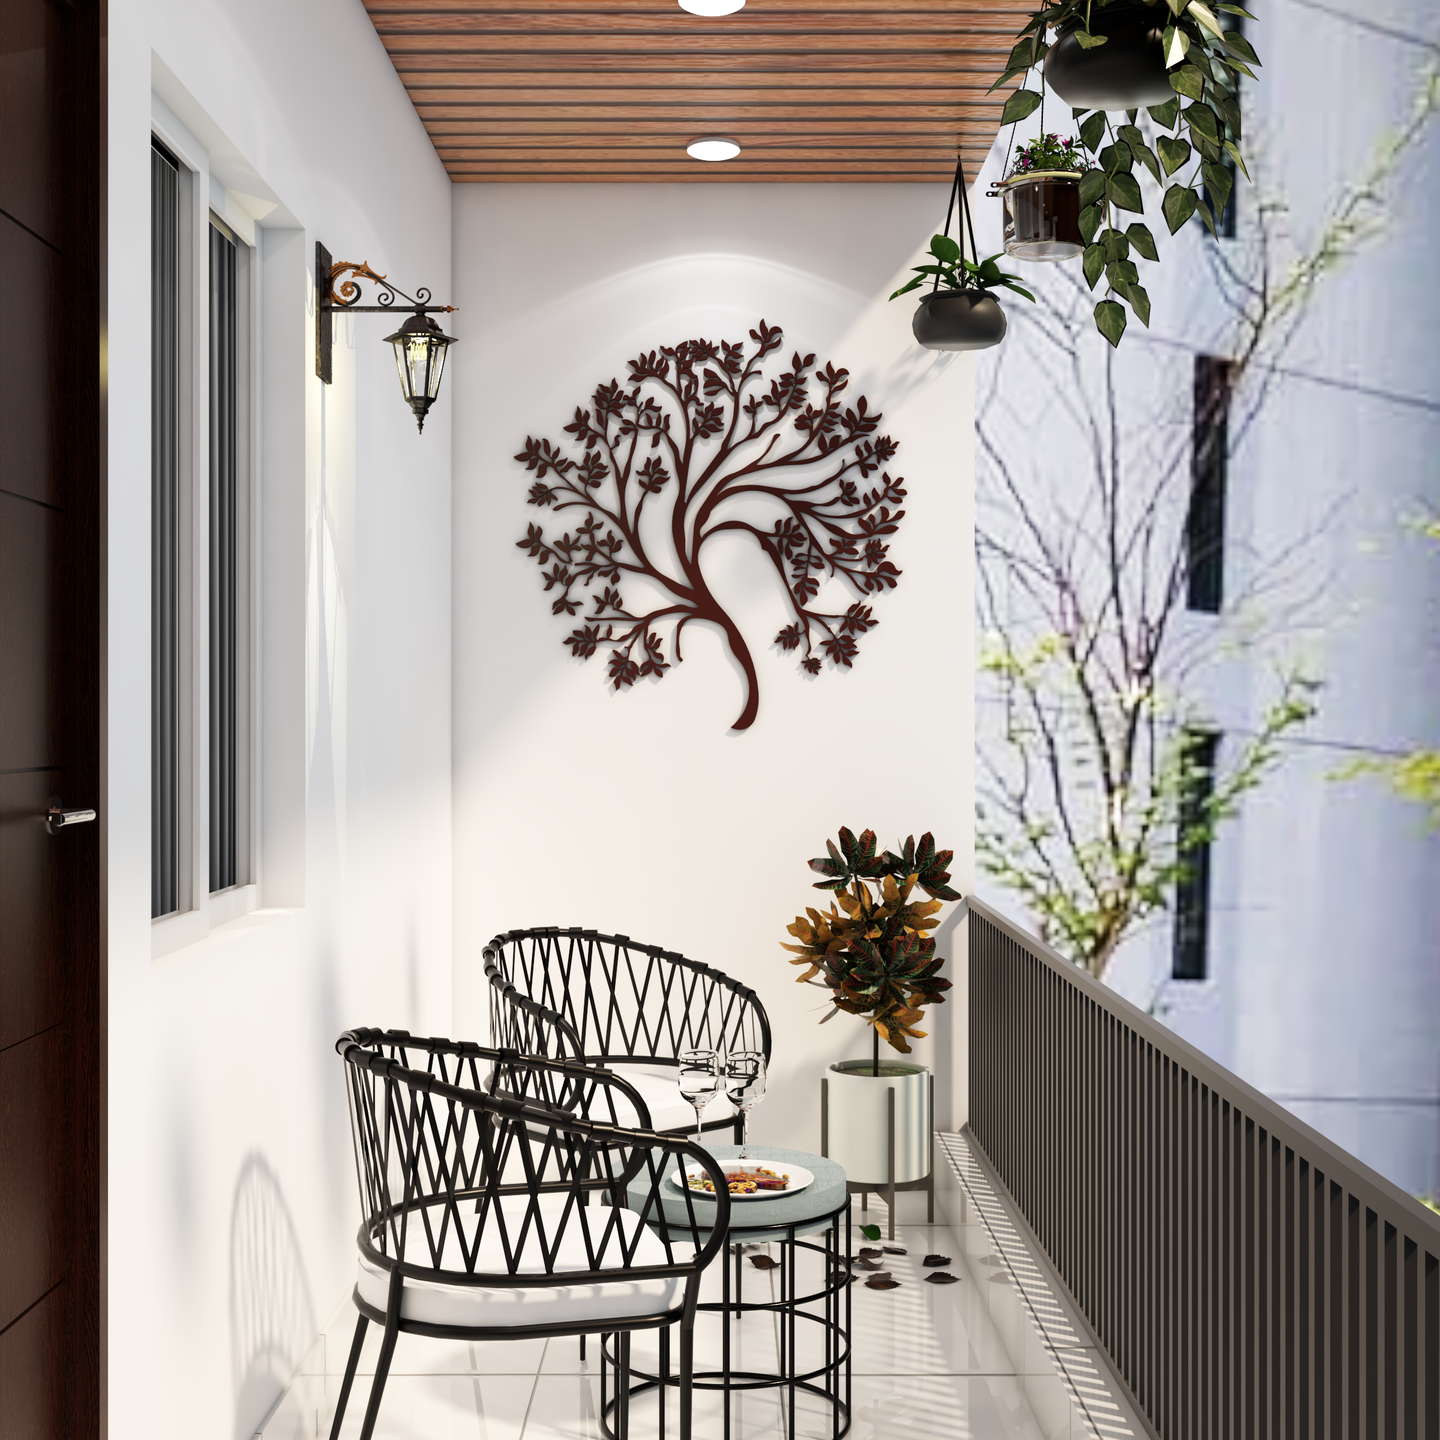 Artistic Balcony Design With Metallic Tree - Livspace